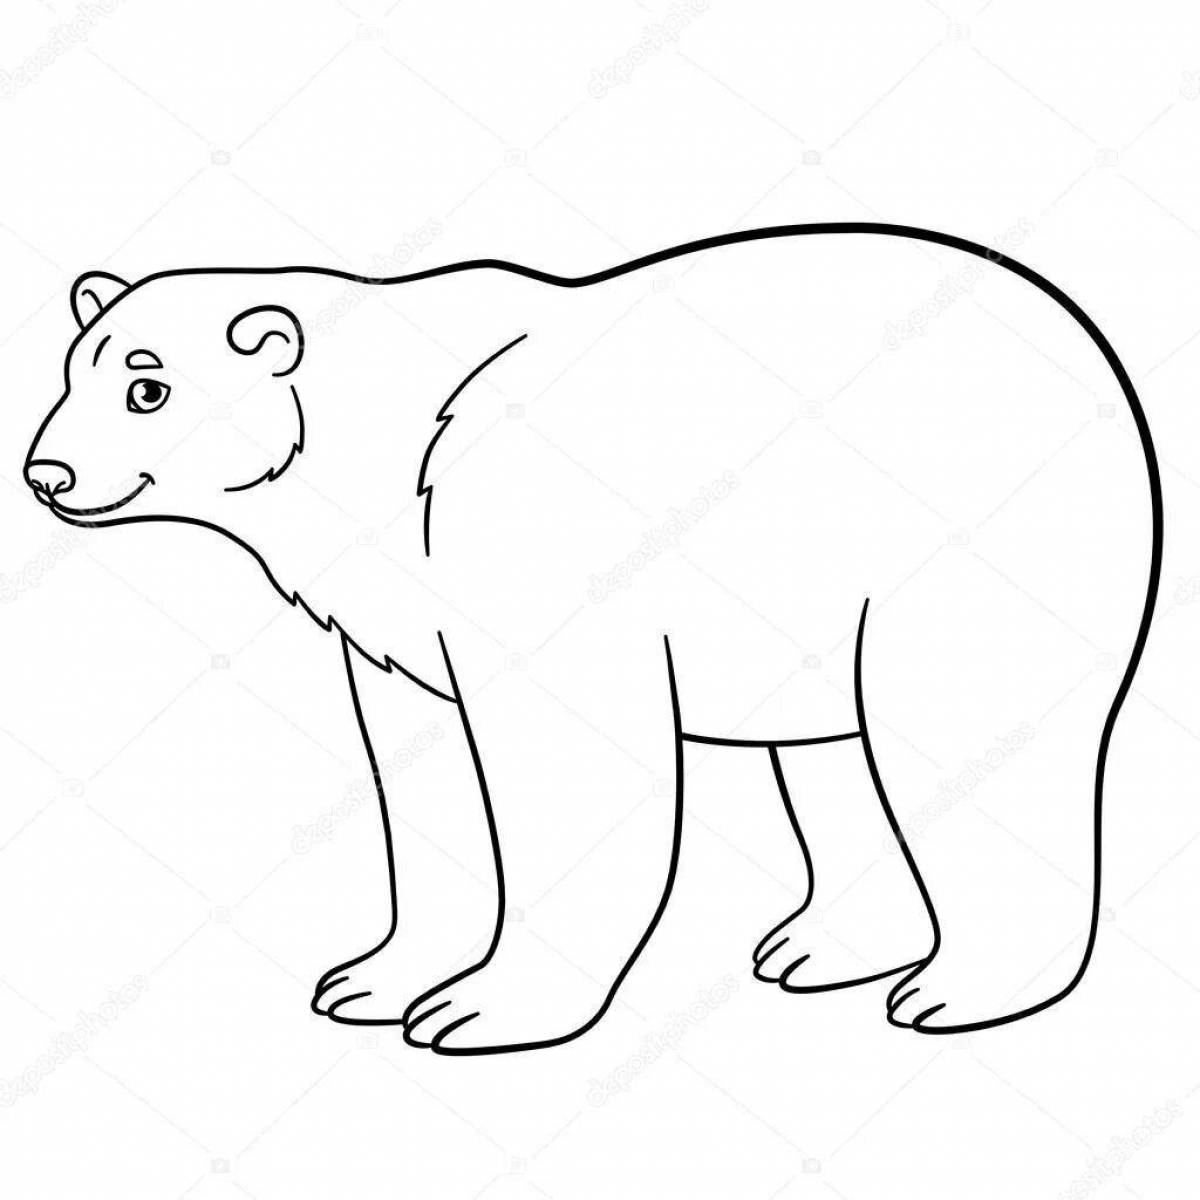 Joyful drawing of a polar bear